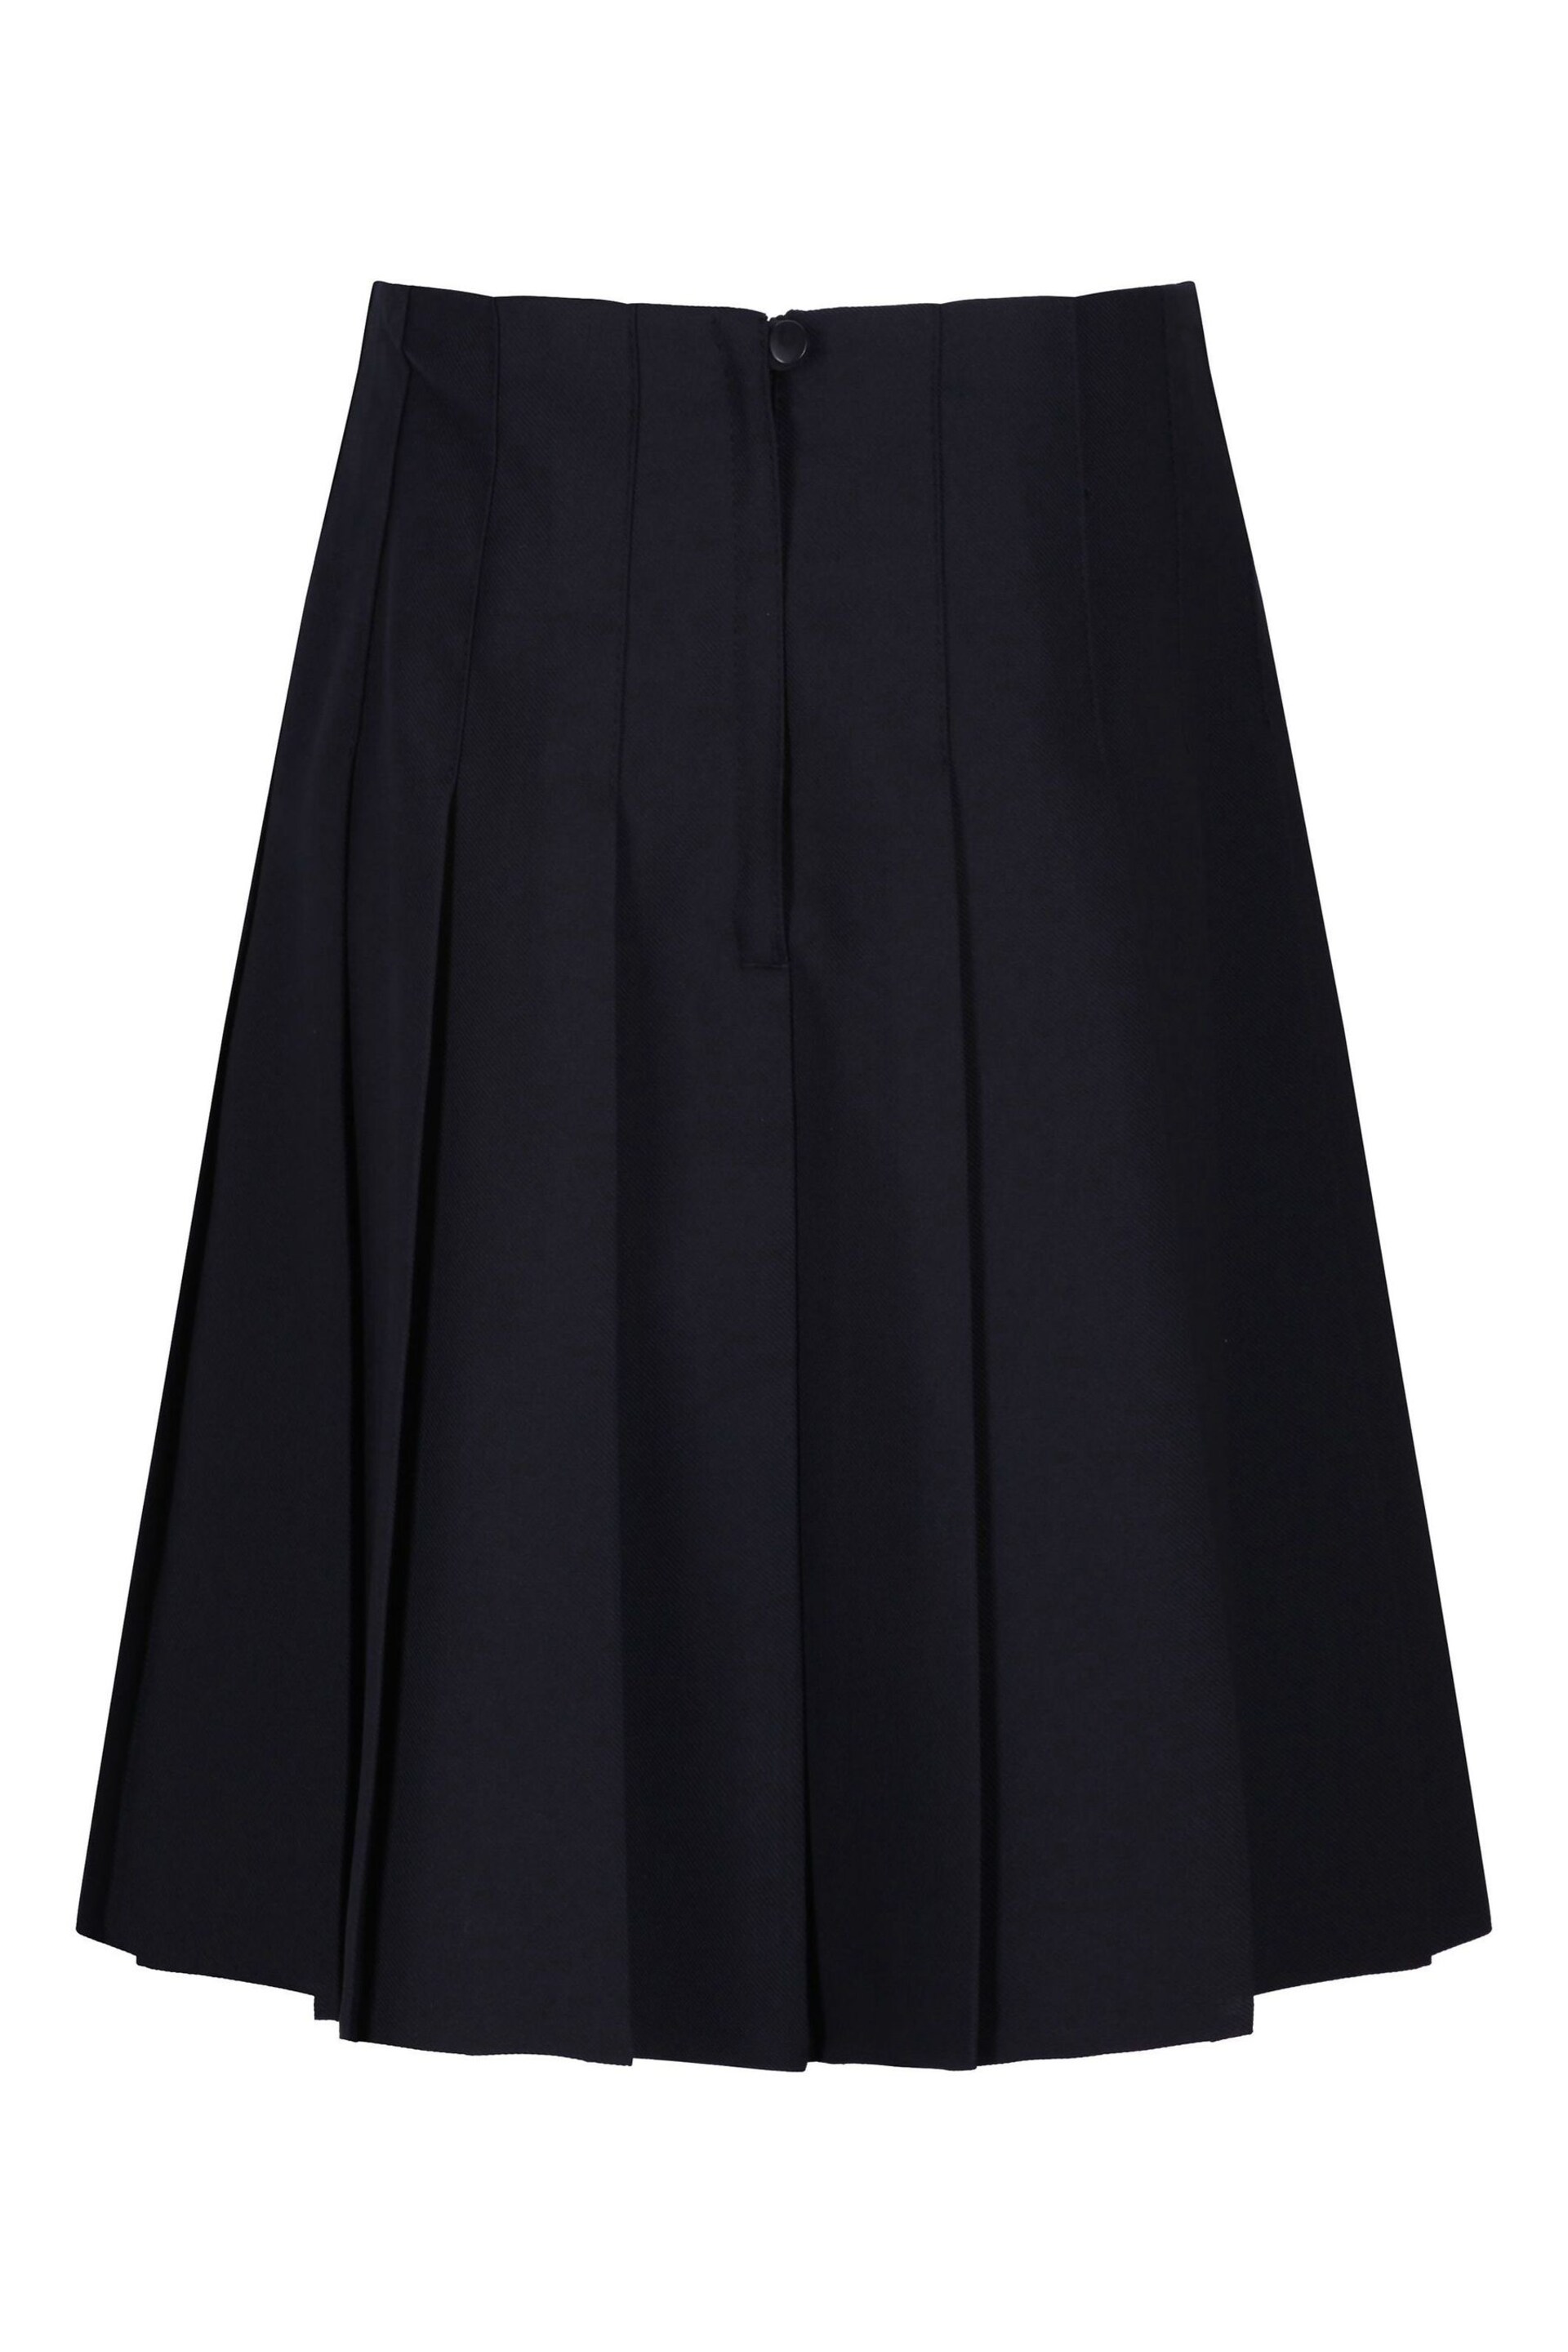 Trutex Senior Girls Permanent Pleats School Skirt - Image 4 of 5